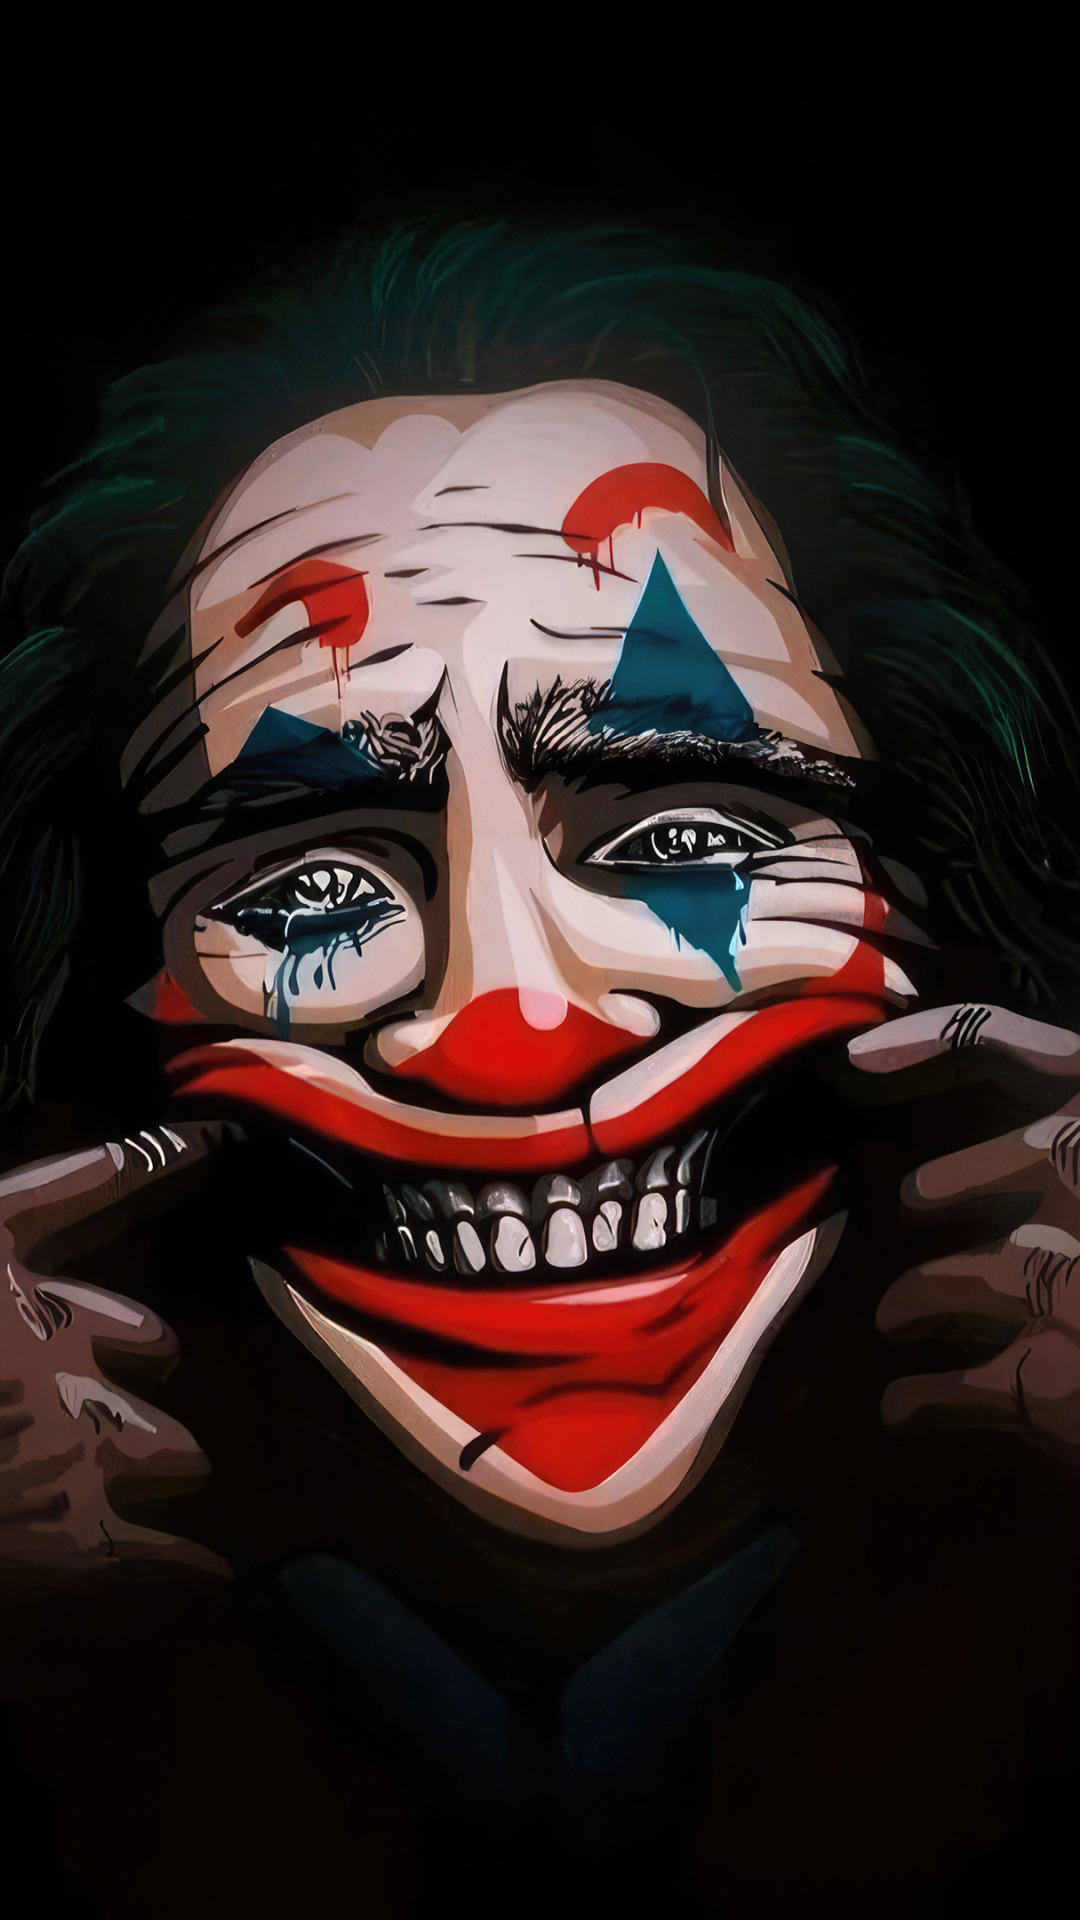 The Joker Batman Black White Painting Art iPhone Wallpapers Free Download